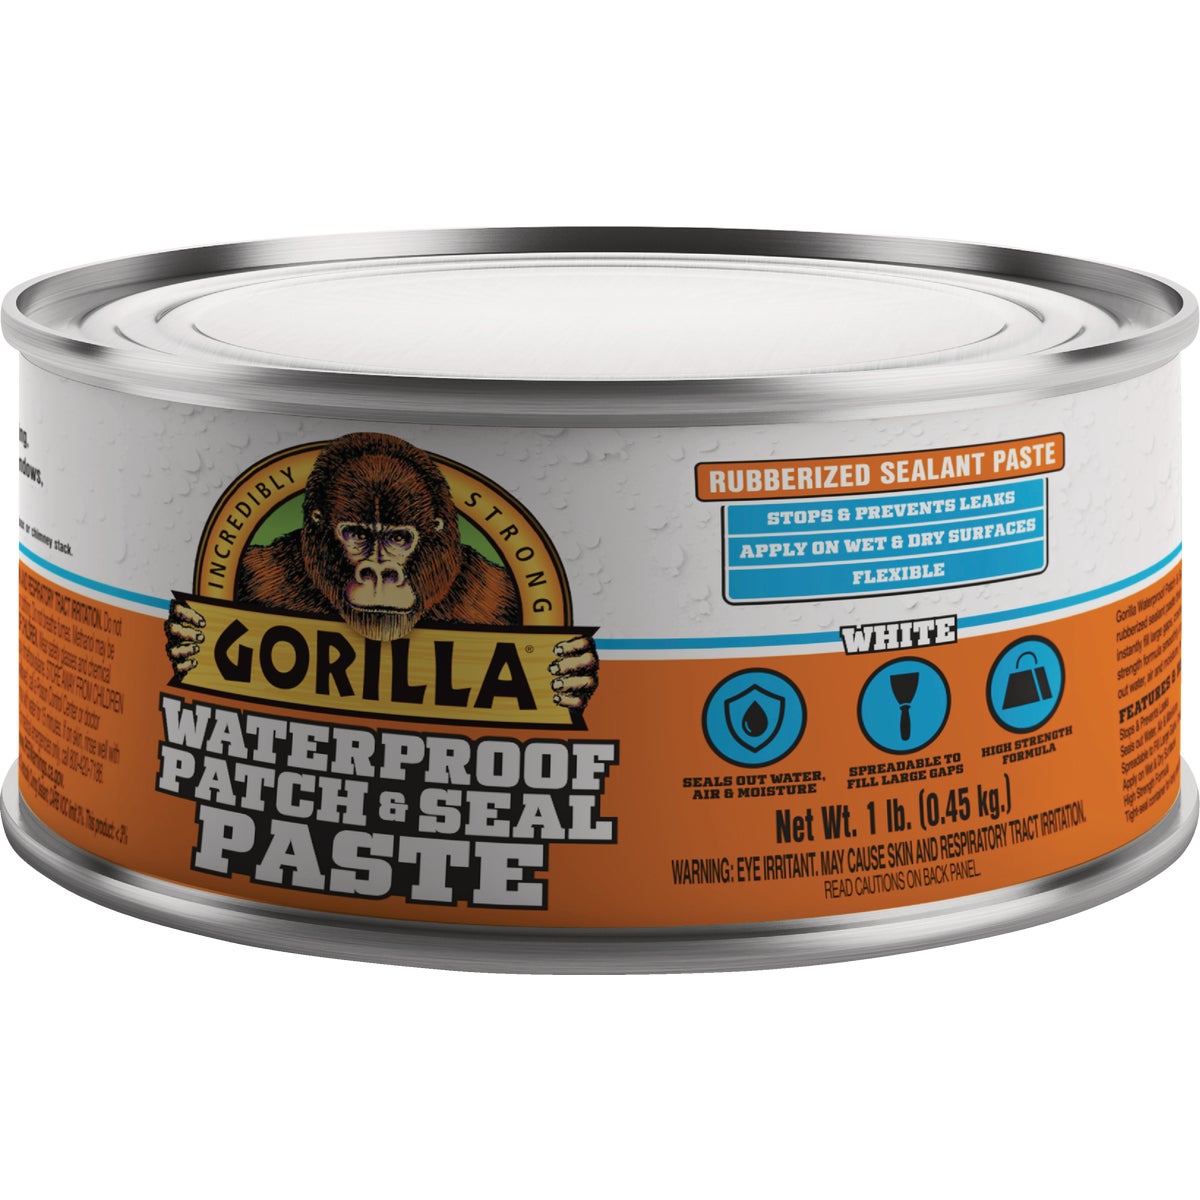 Gorilla 1 Lb. White Waterproof Patch & Seal Paste